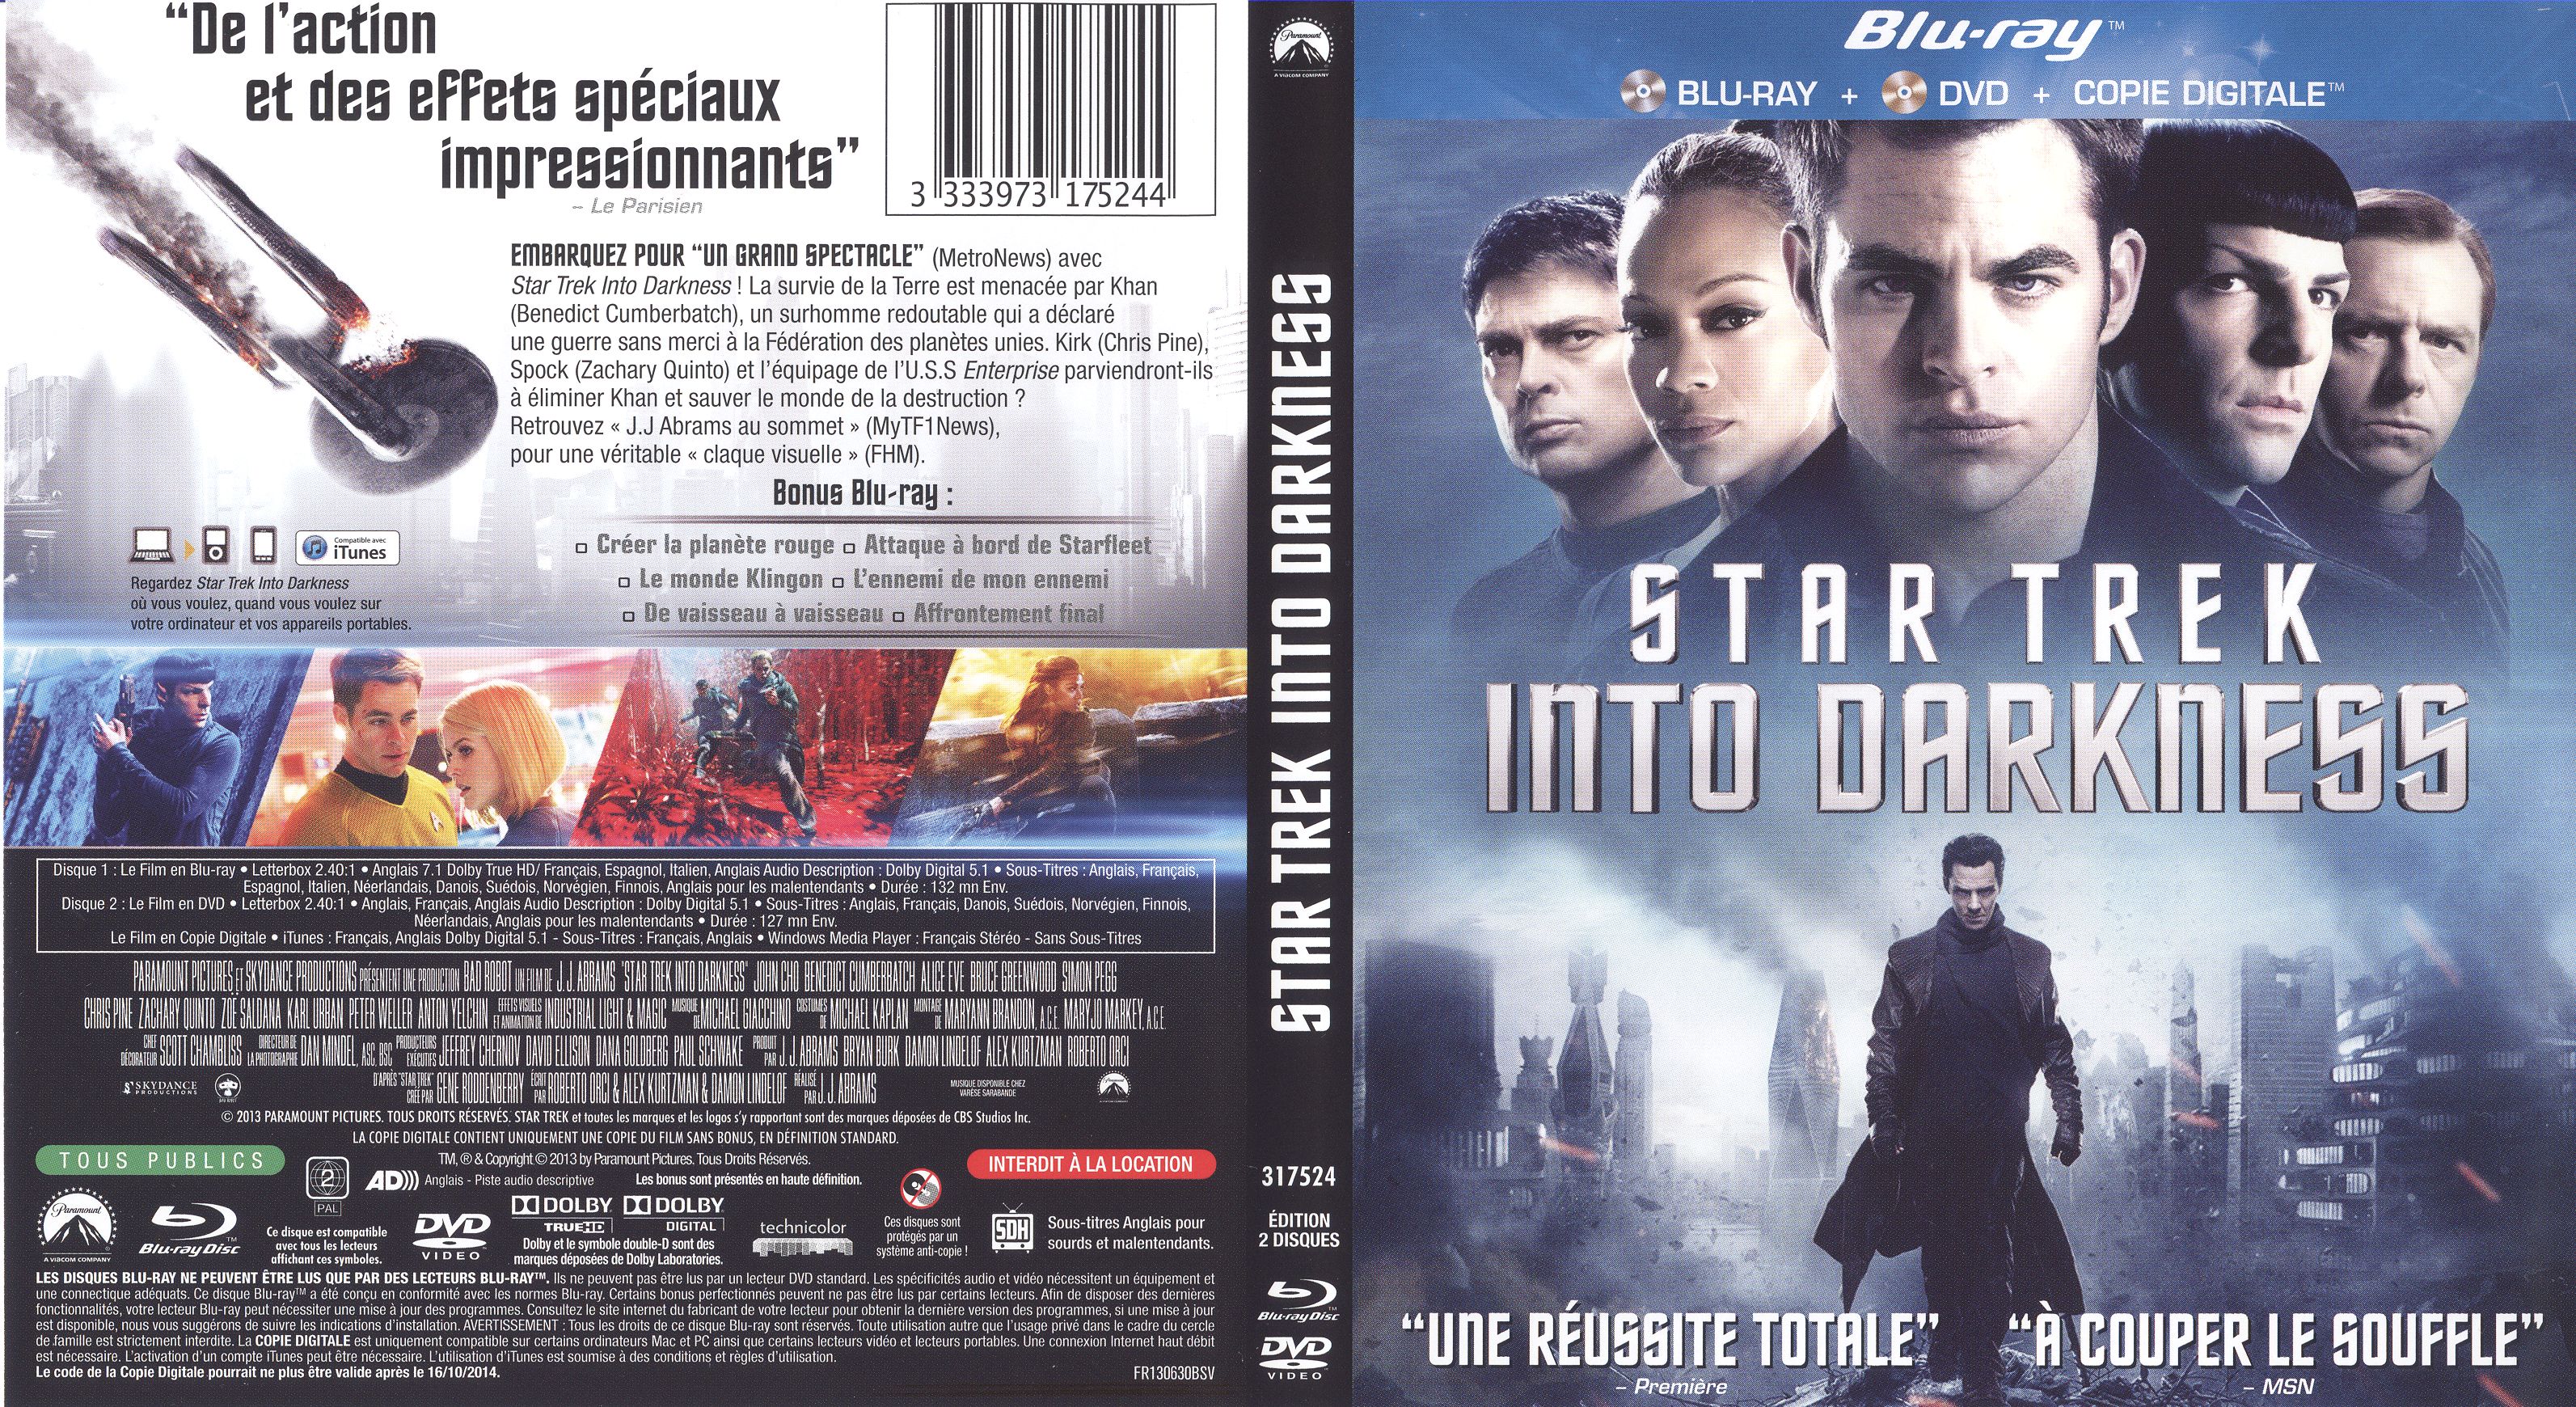 Jaquette DVD Star Trek Into Darkness (BLU-RAY)